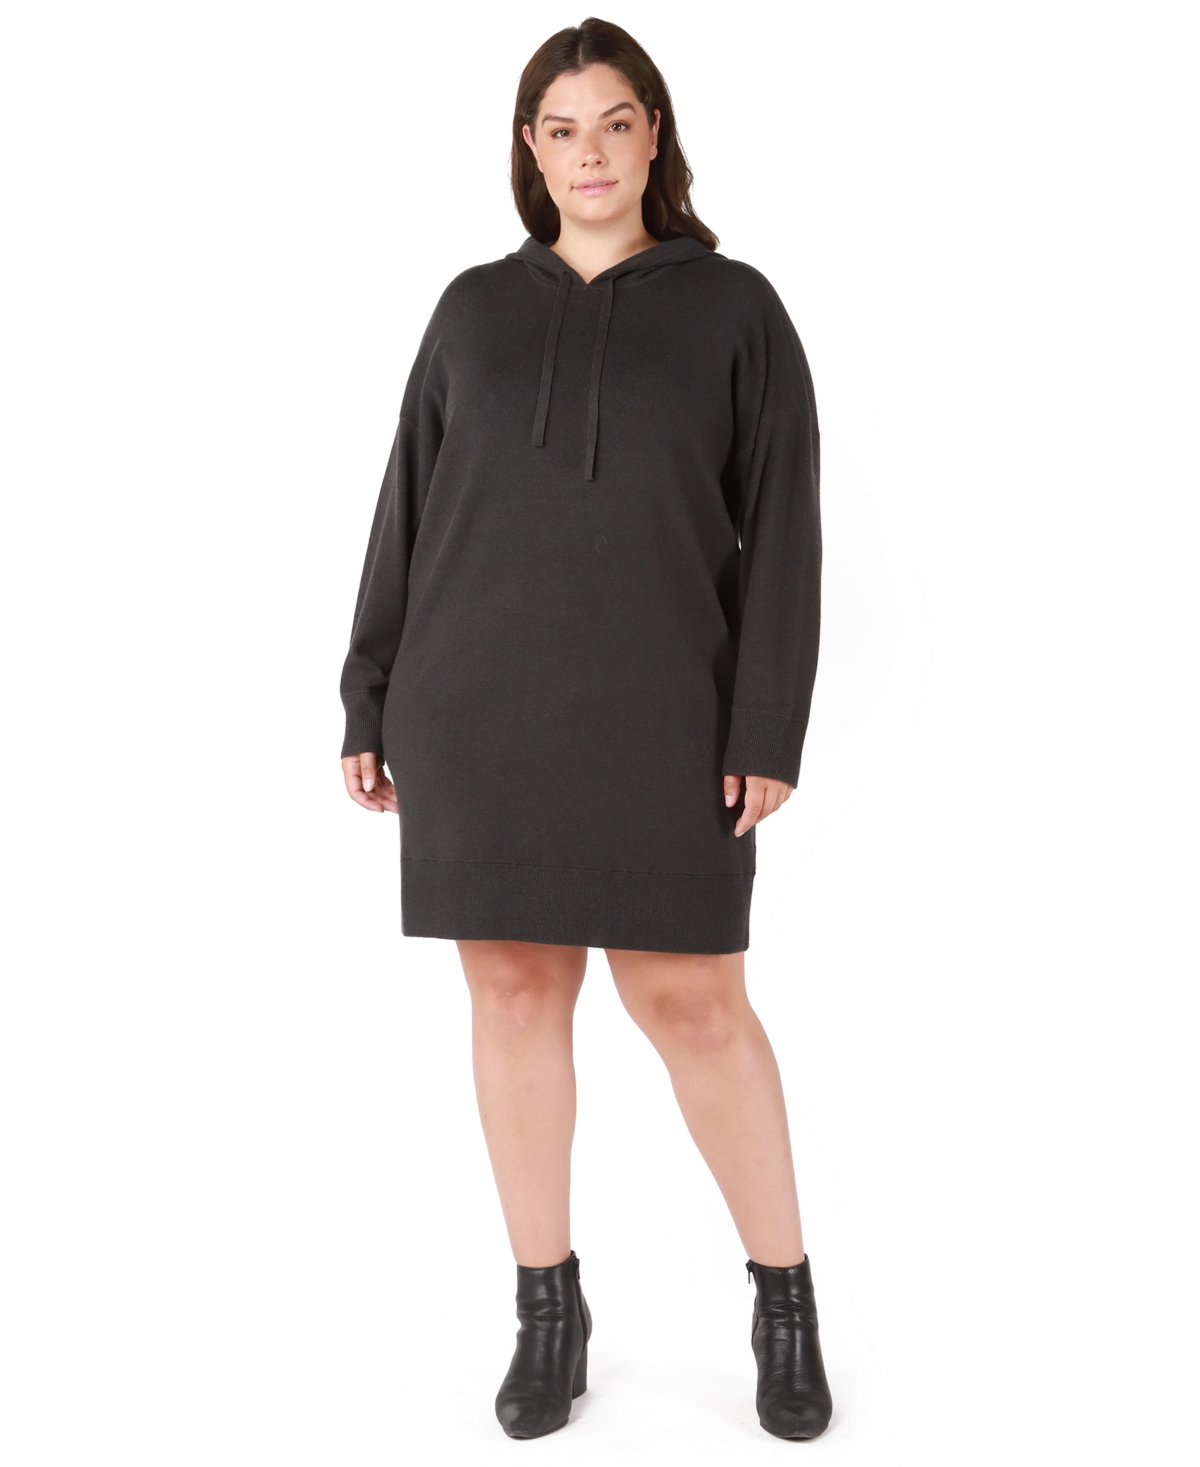 Black Tape Trendy Plus Size Hooded Sweater Dress